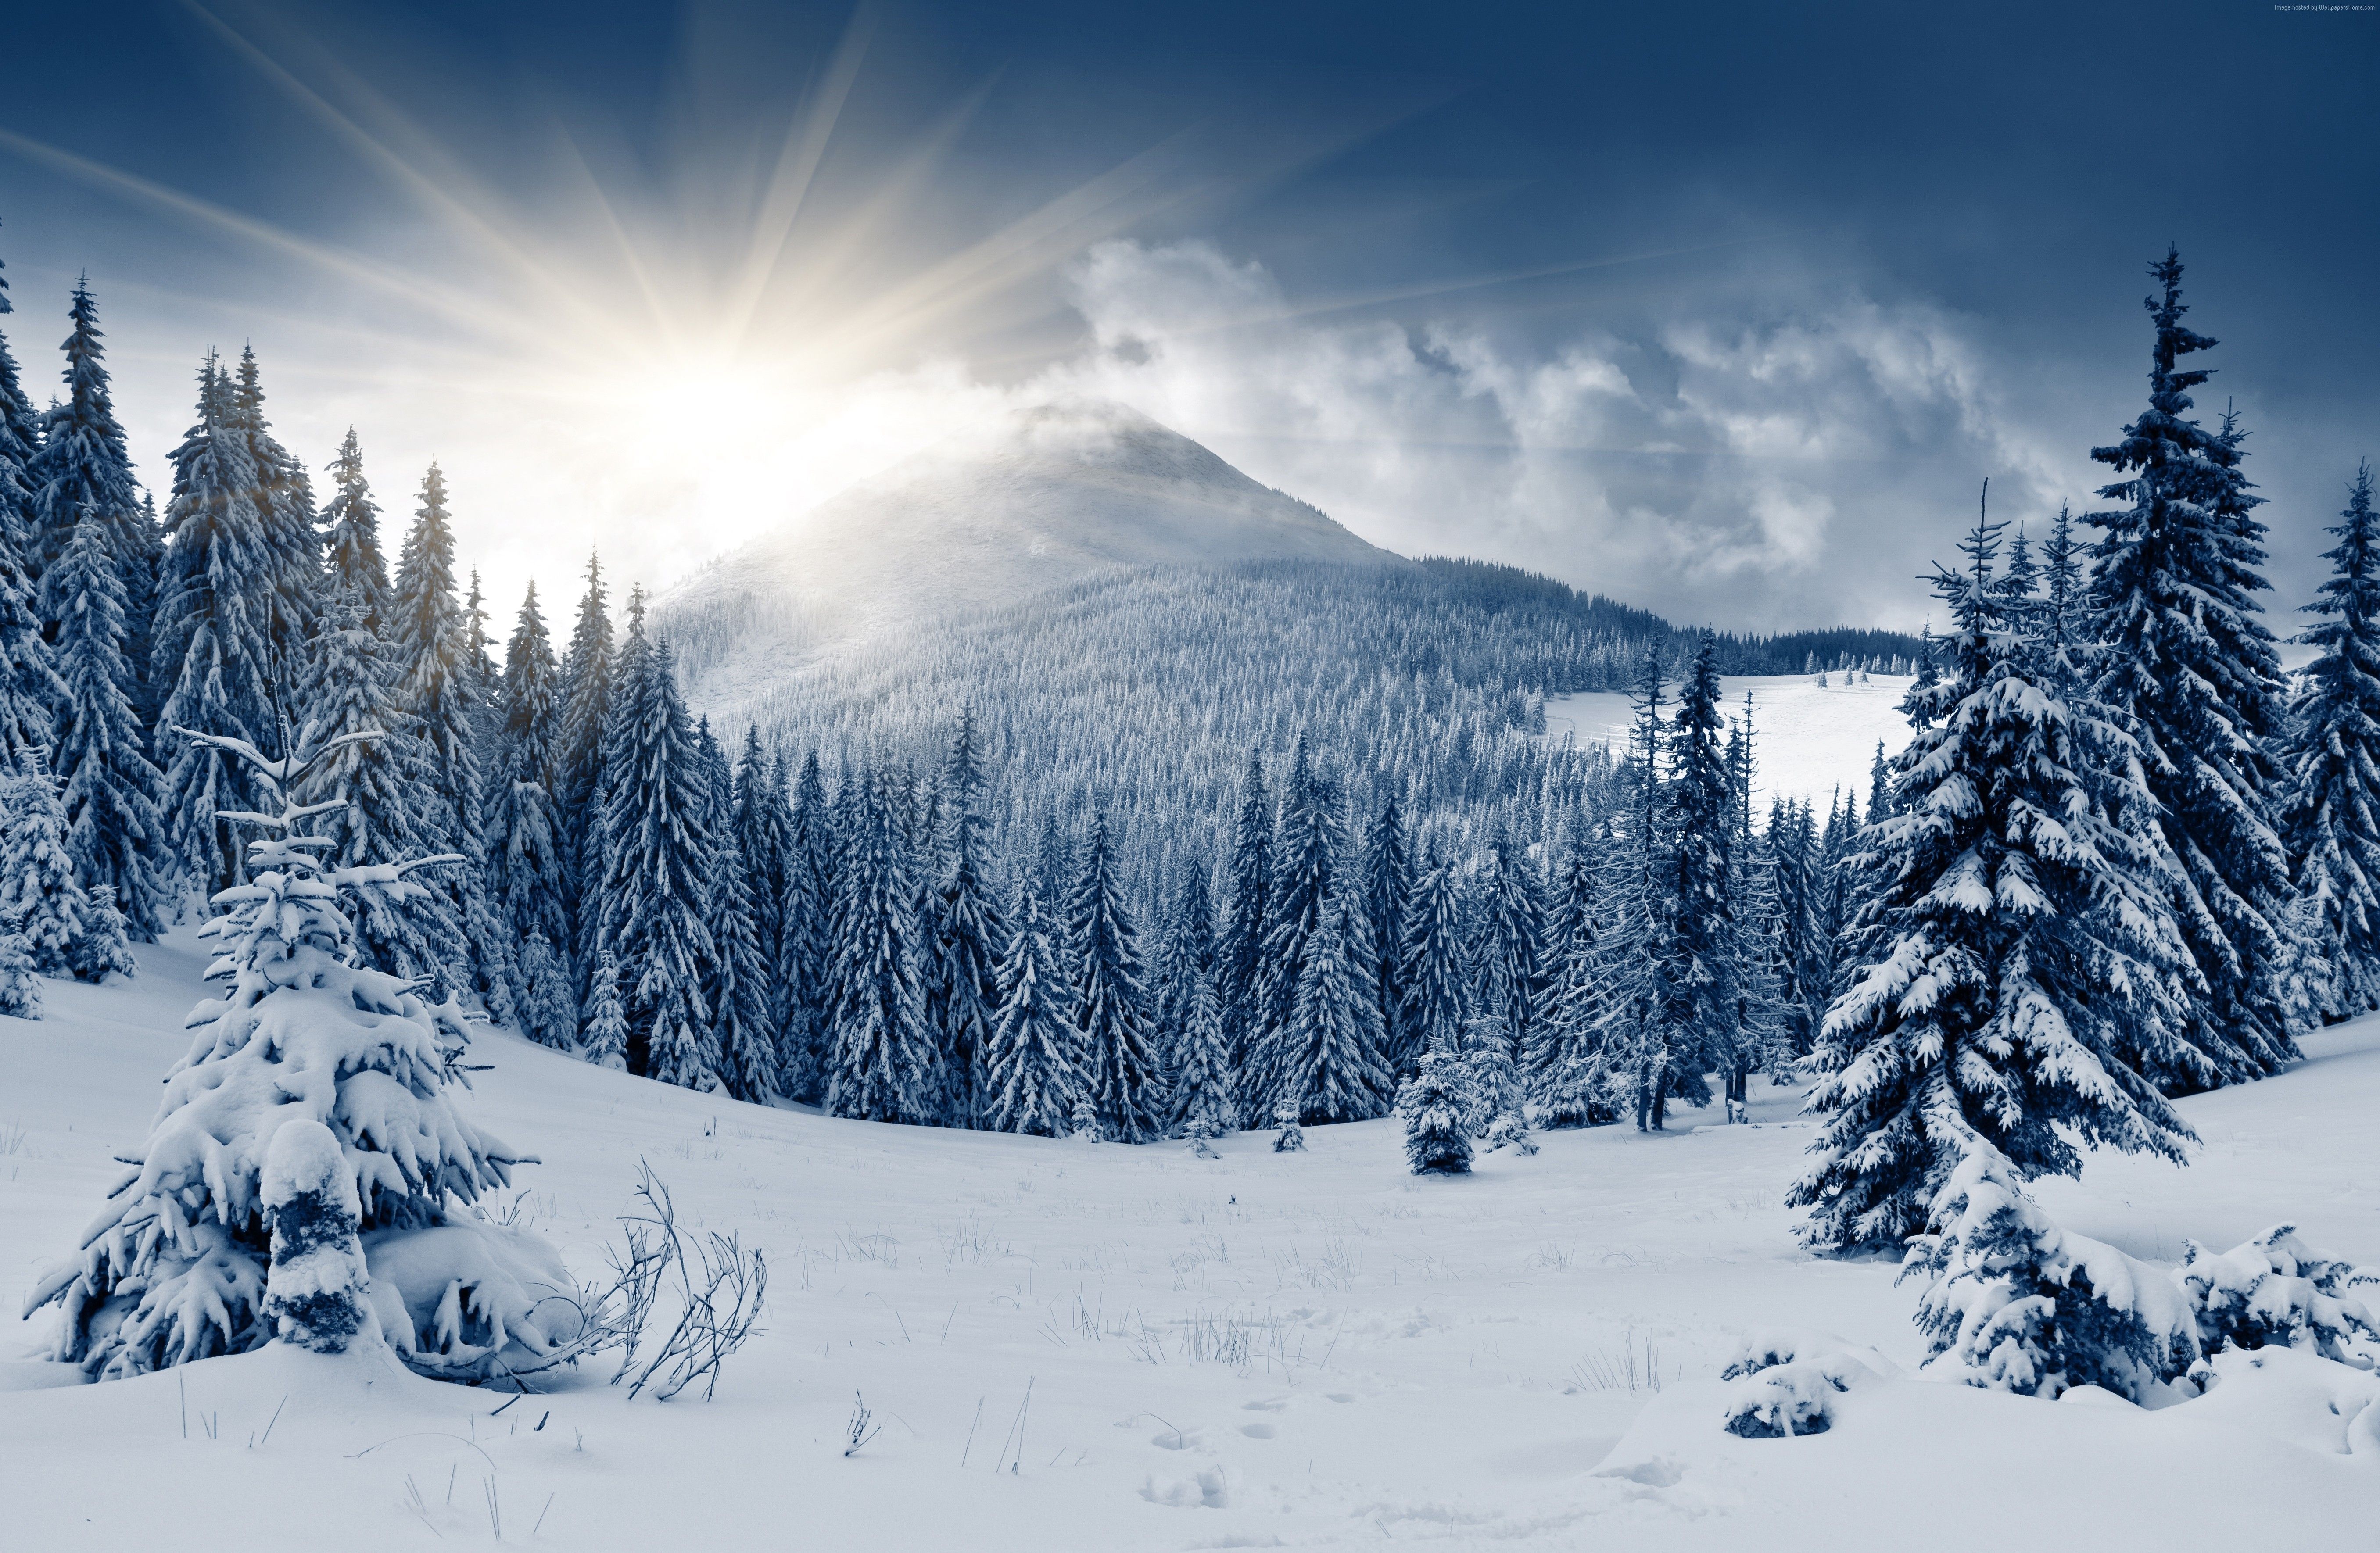 Winter Forest Wallpaper, Nature / Forest: Winter Forest, Mountain, Sun, Snow, Fir Trees. Winter Landscape, Winter Forest, Winter Scenes